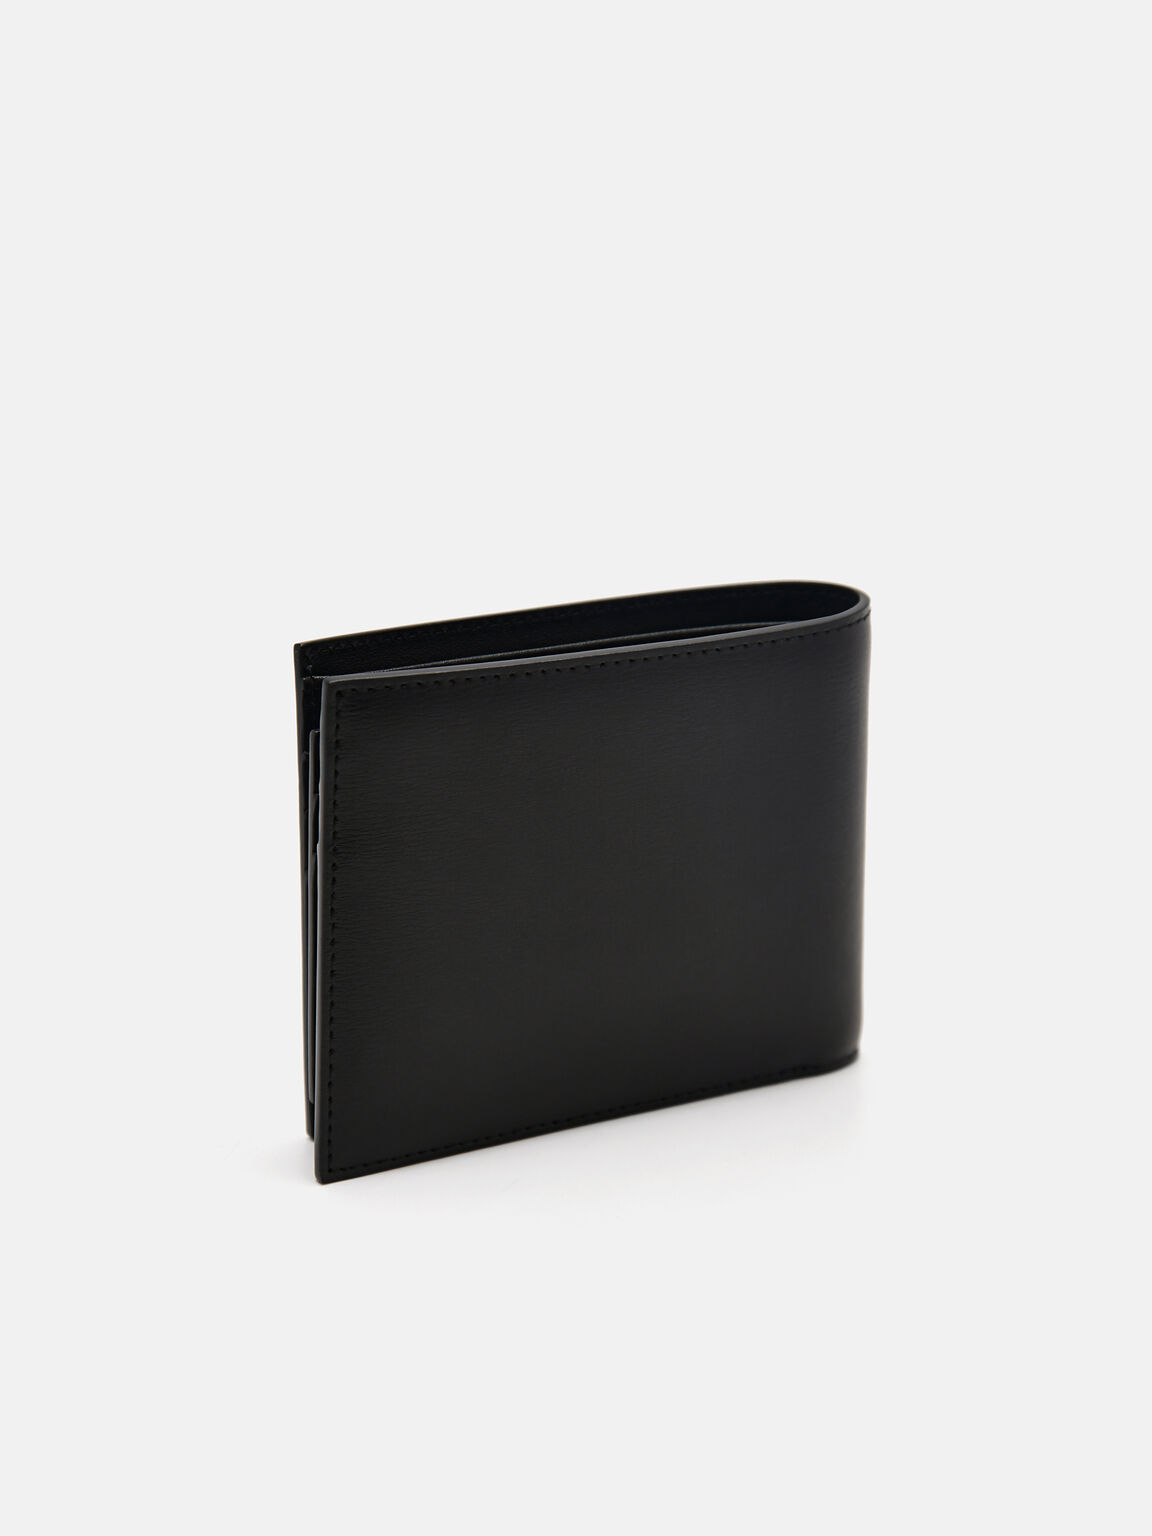 Leather Bi-Fold Wallet with Insert, Black, hi-res